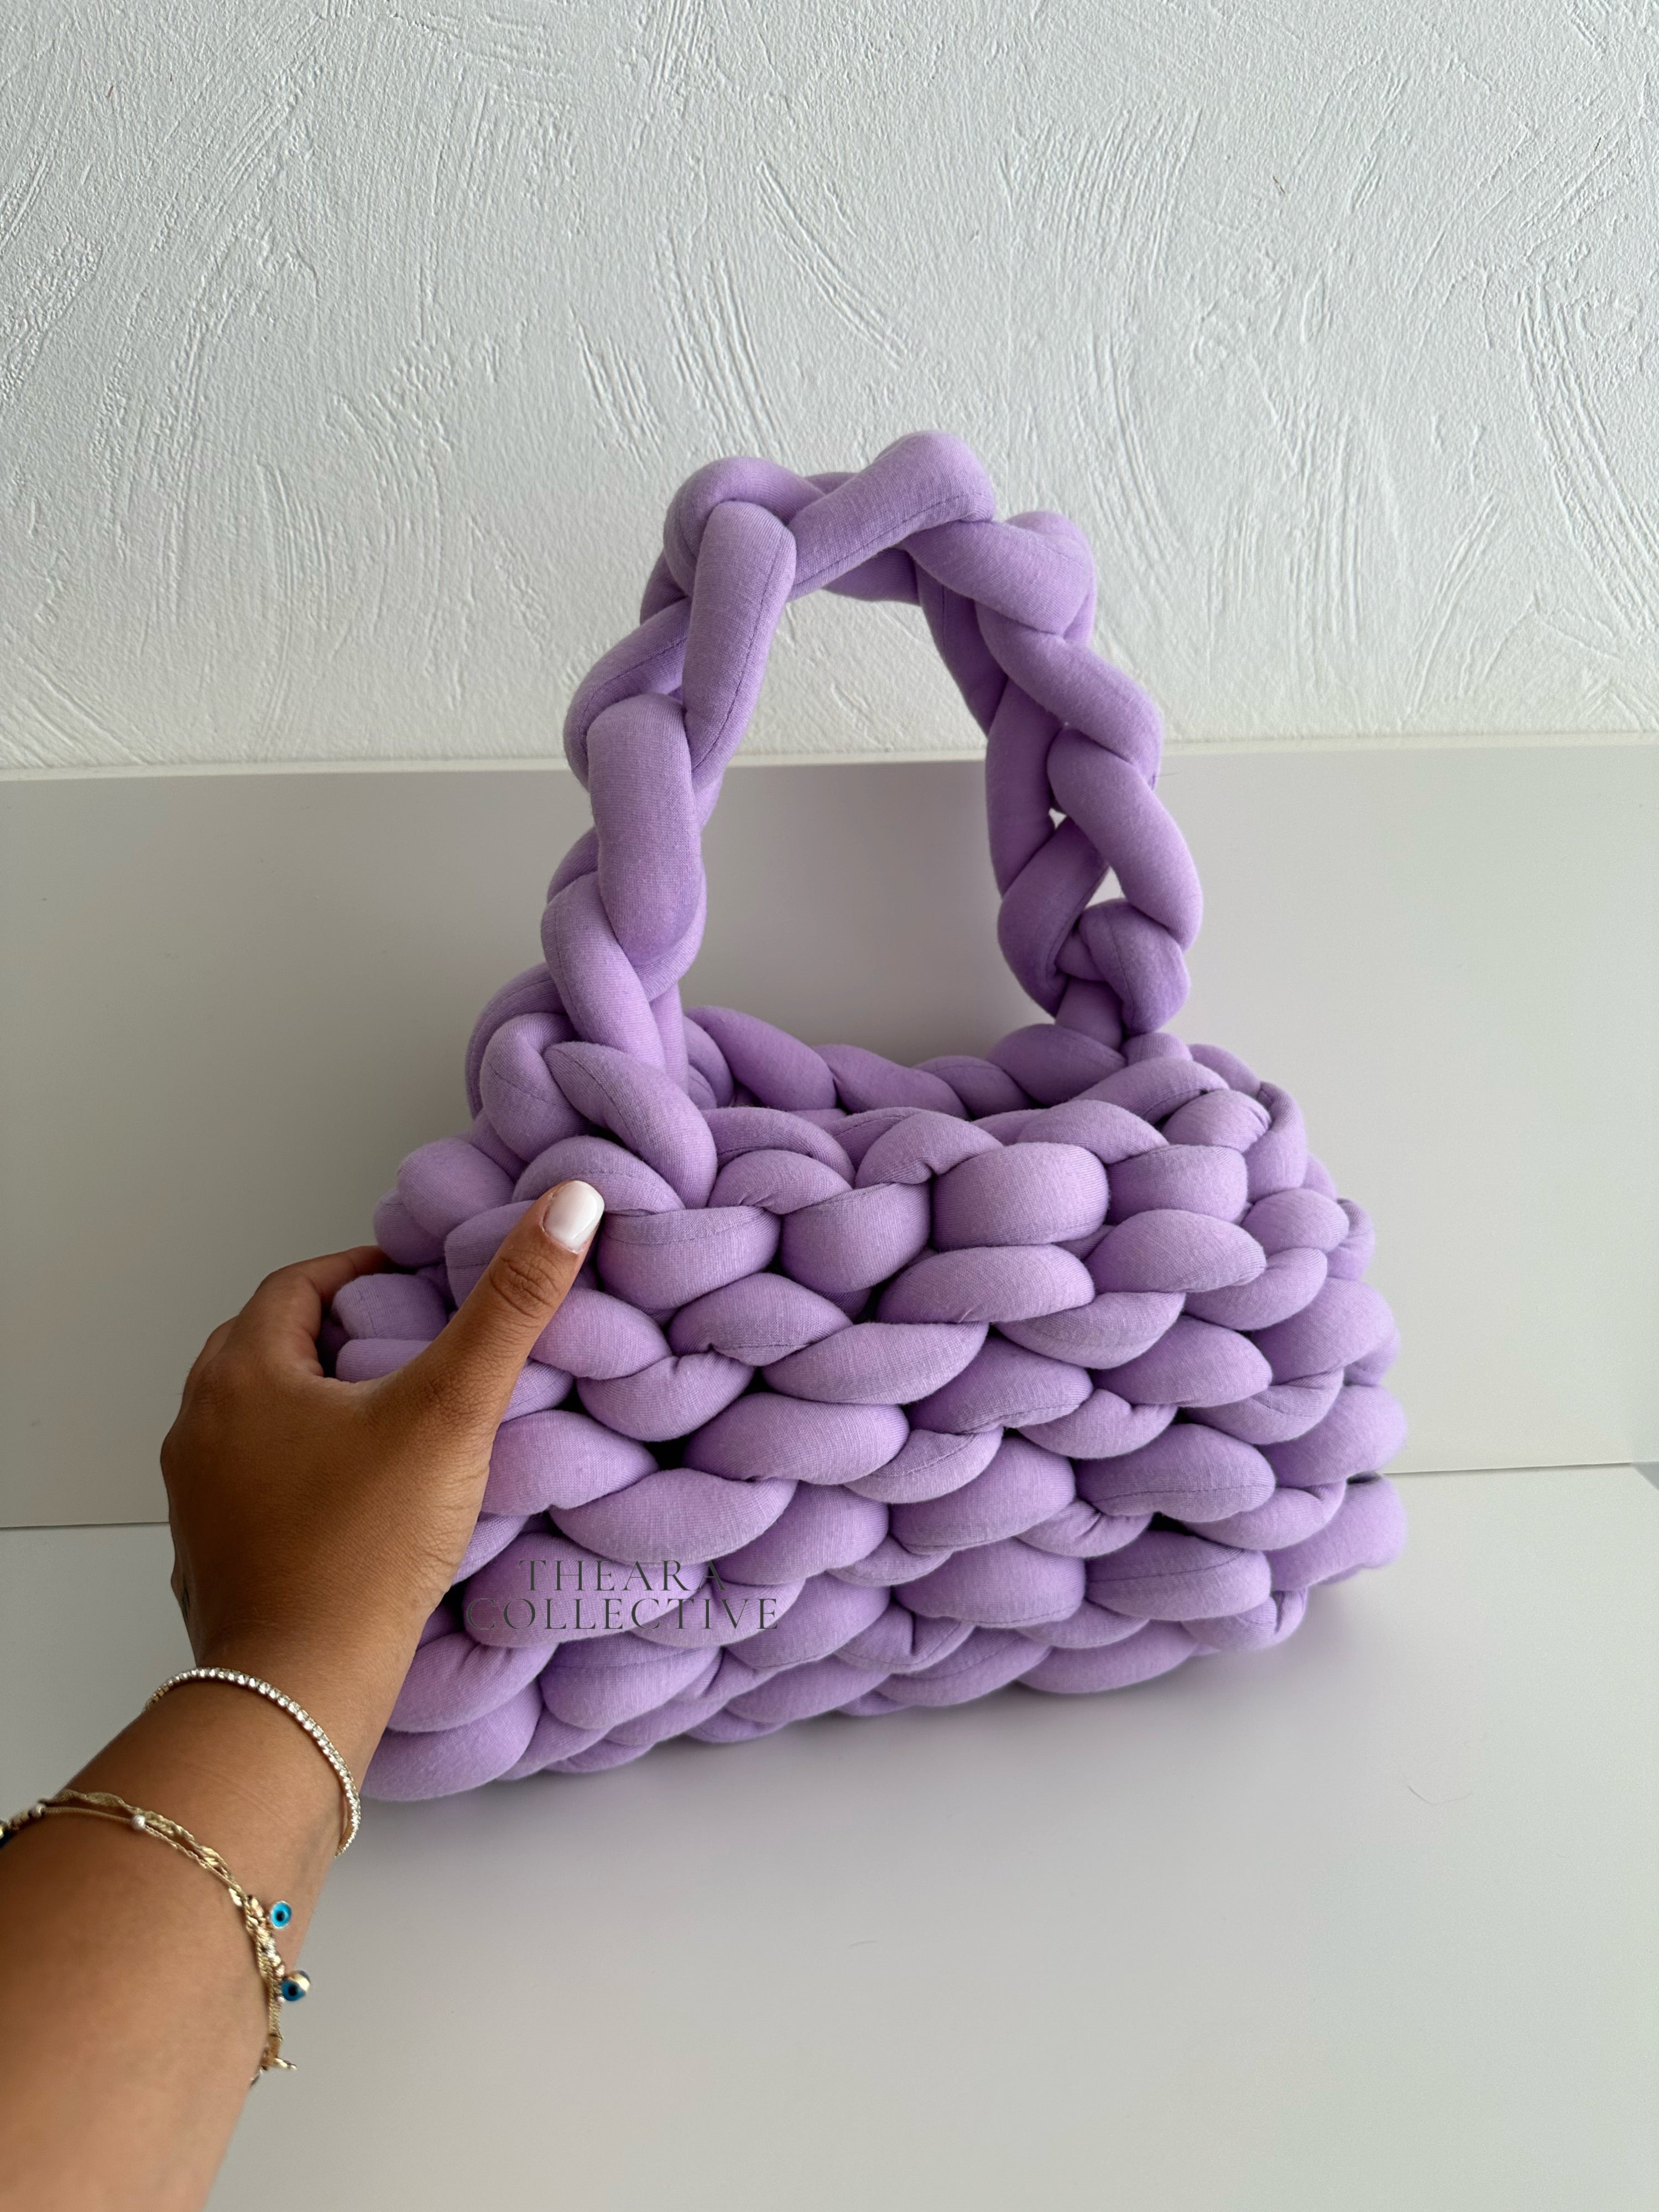 Chunky Bag - Pastel Purple - Theara Collective